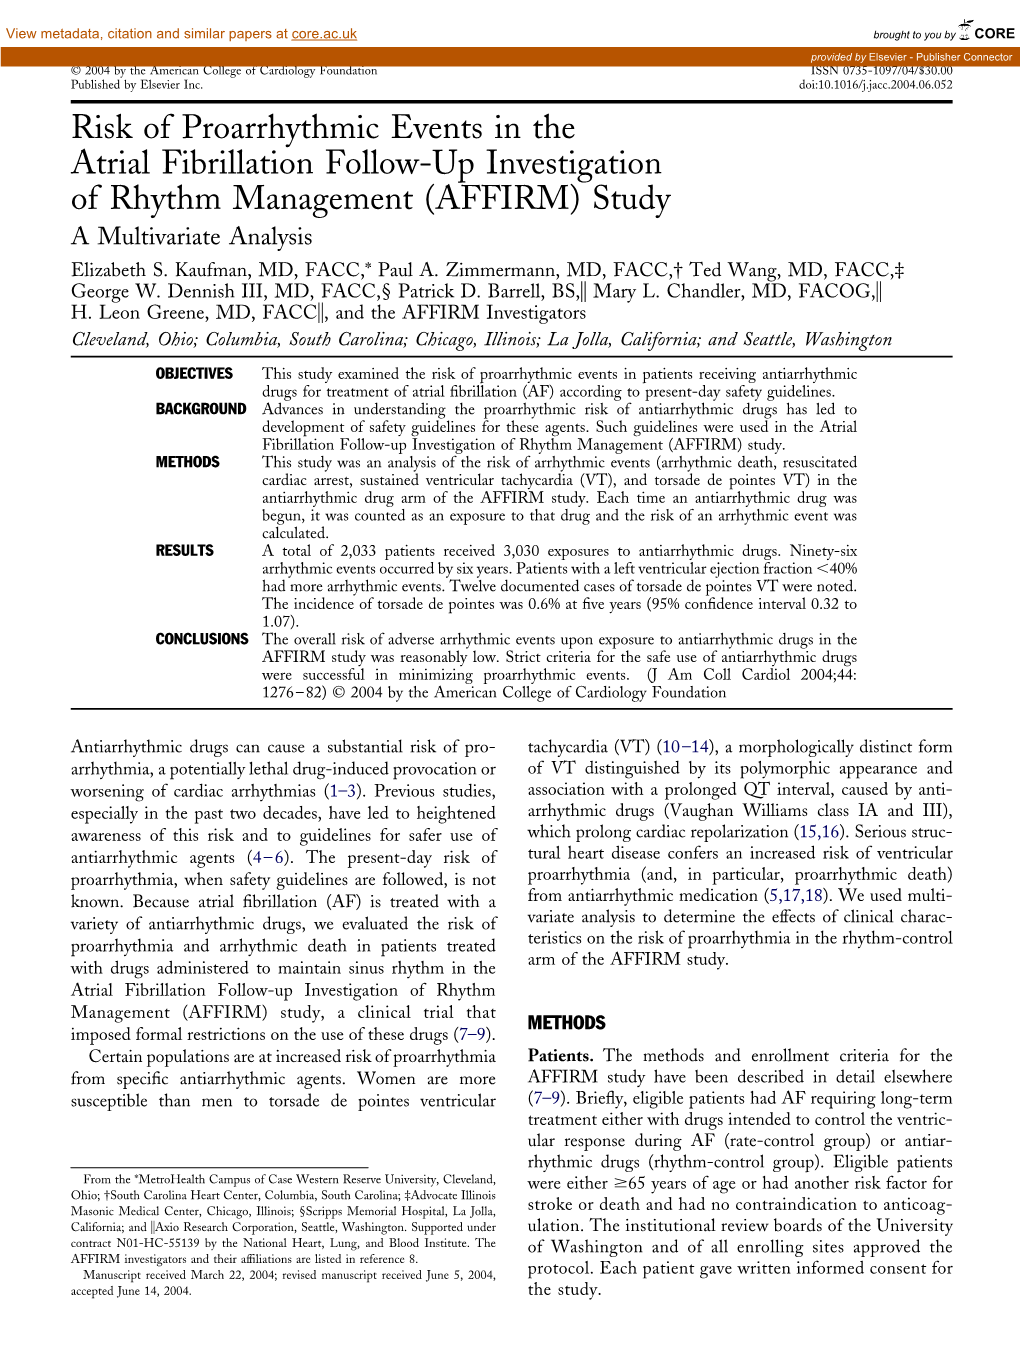 Risk of Proarrhythmic Events in the Atrial Fibrillation Follow-Up Investigation of Rhythm Management (AFFIRM) Study a Multivariate Analysis Elizabeth S